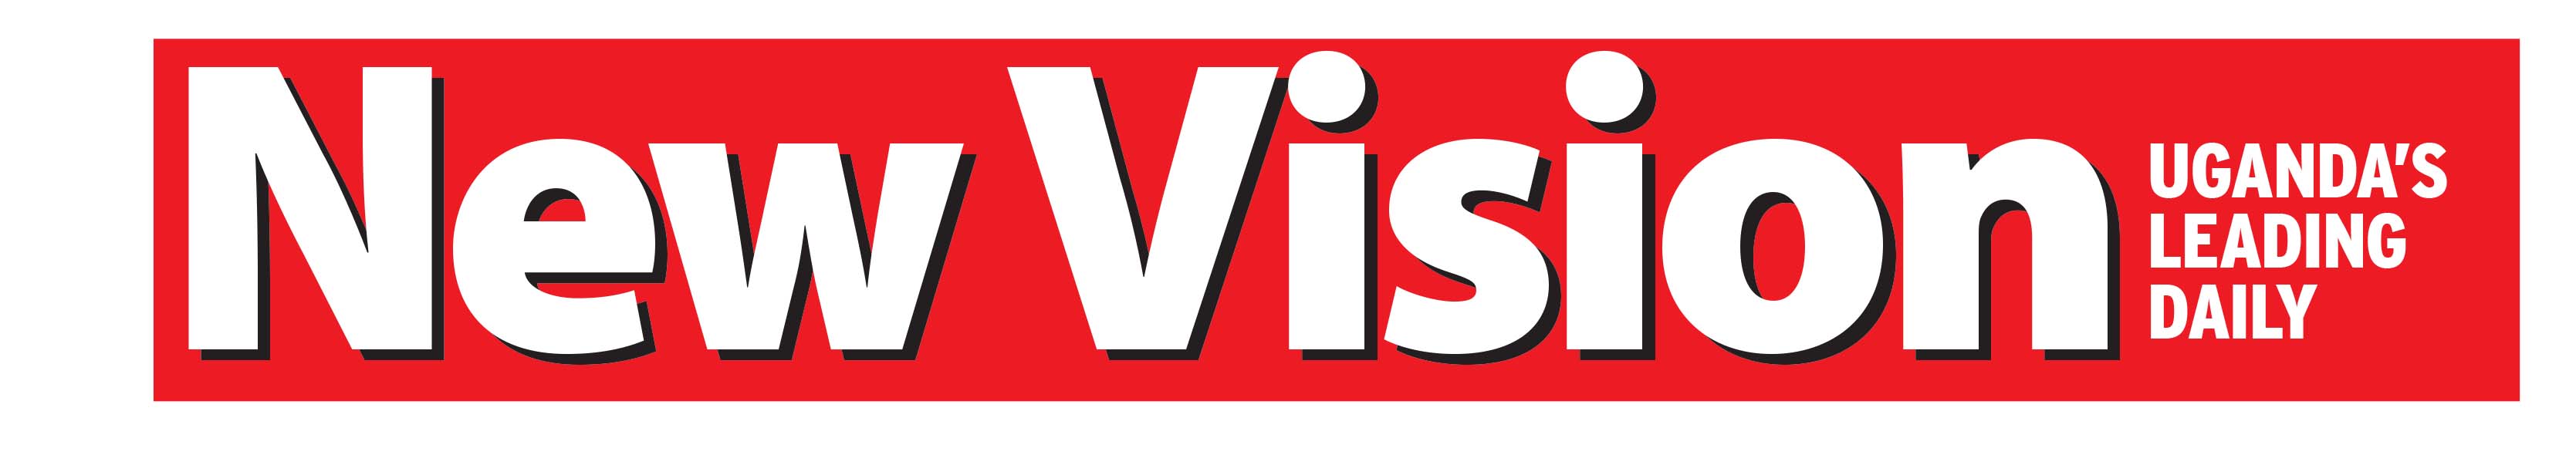 New vision logo